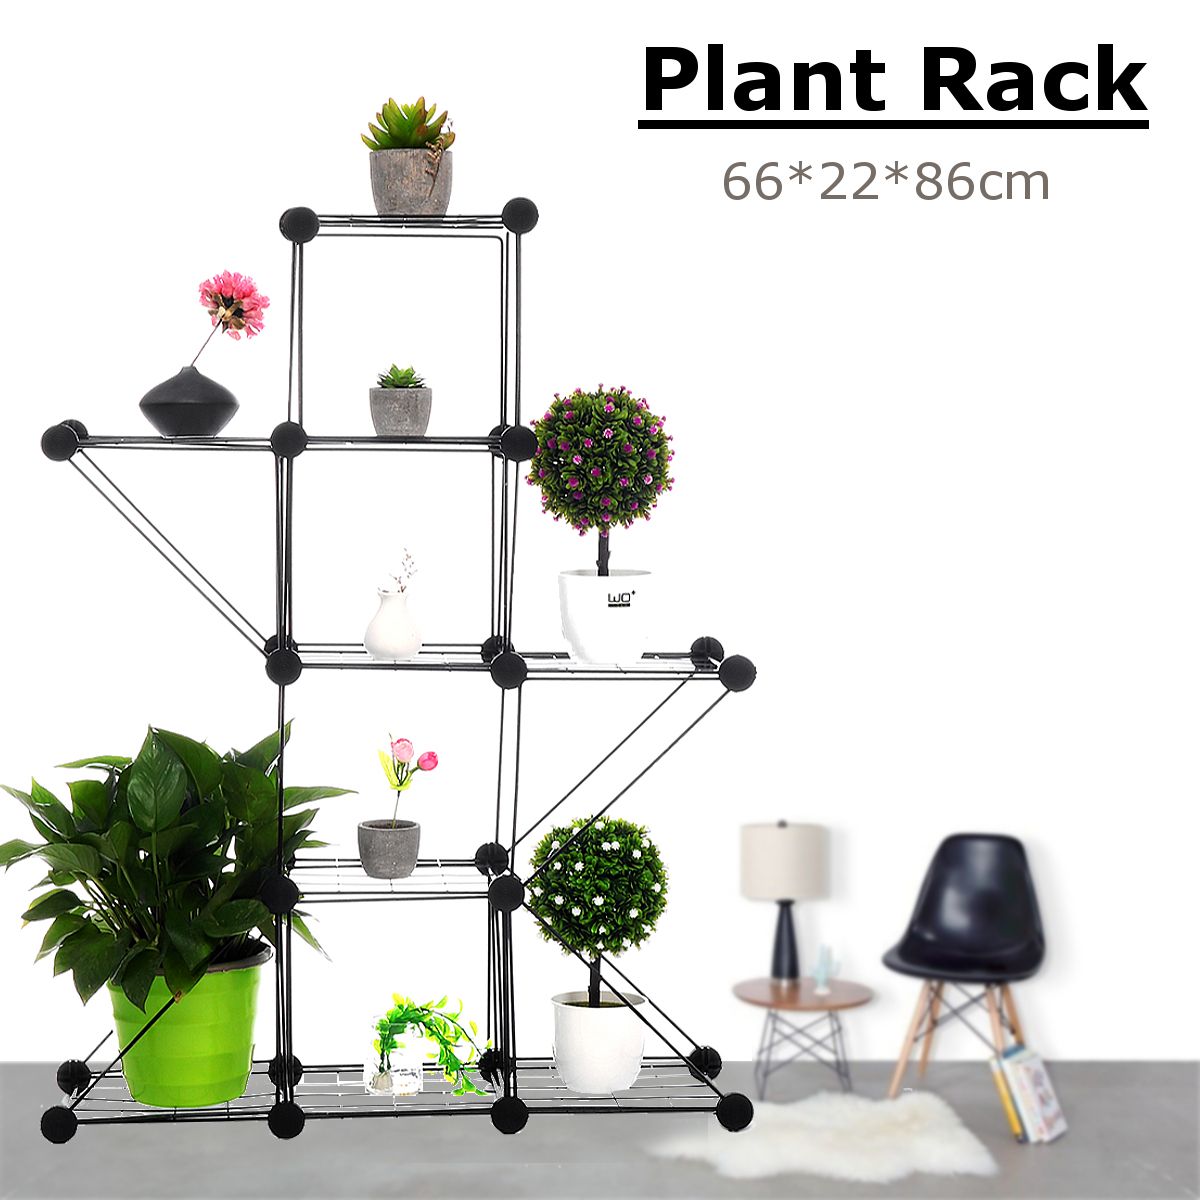 662286-cm-Balcony-Metal-Flower-Plant-Standing-Rack-Foldable-Corner-Shelf-Display-Save-Kitchen-Storag-1514360